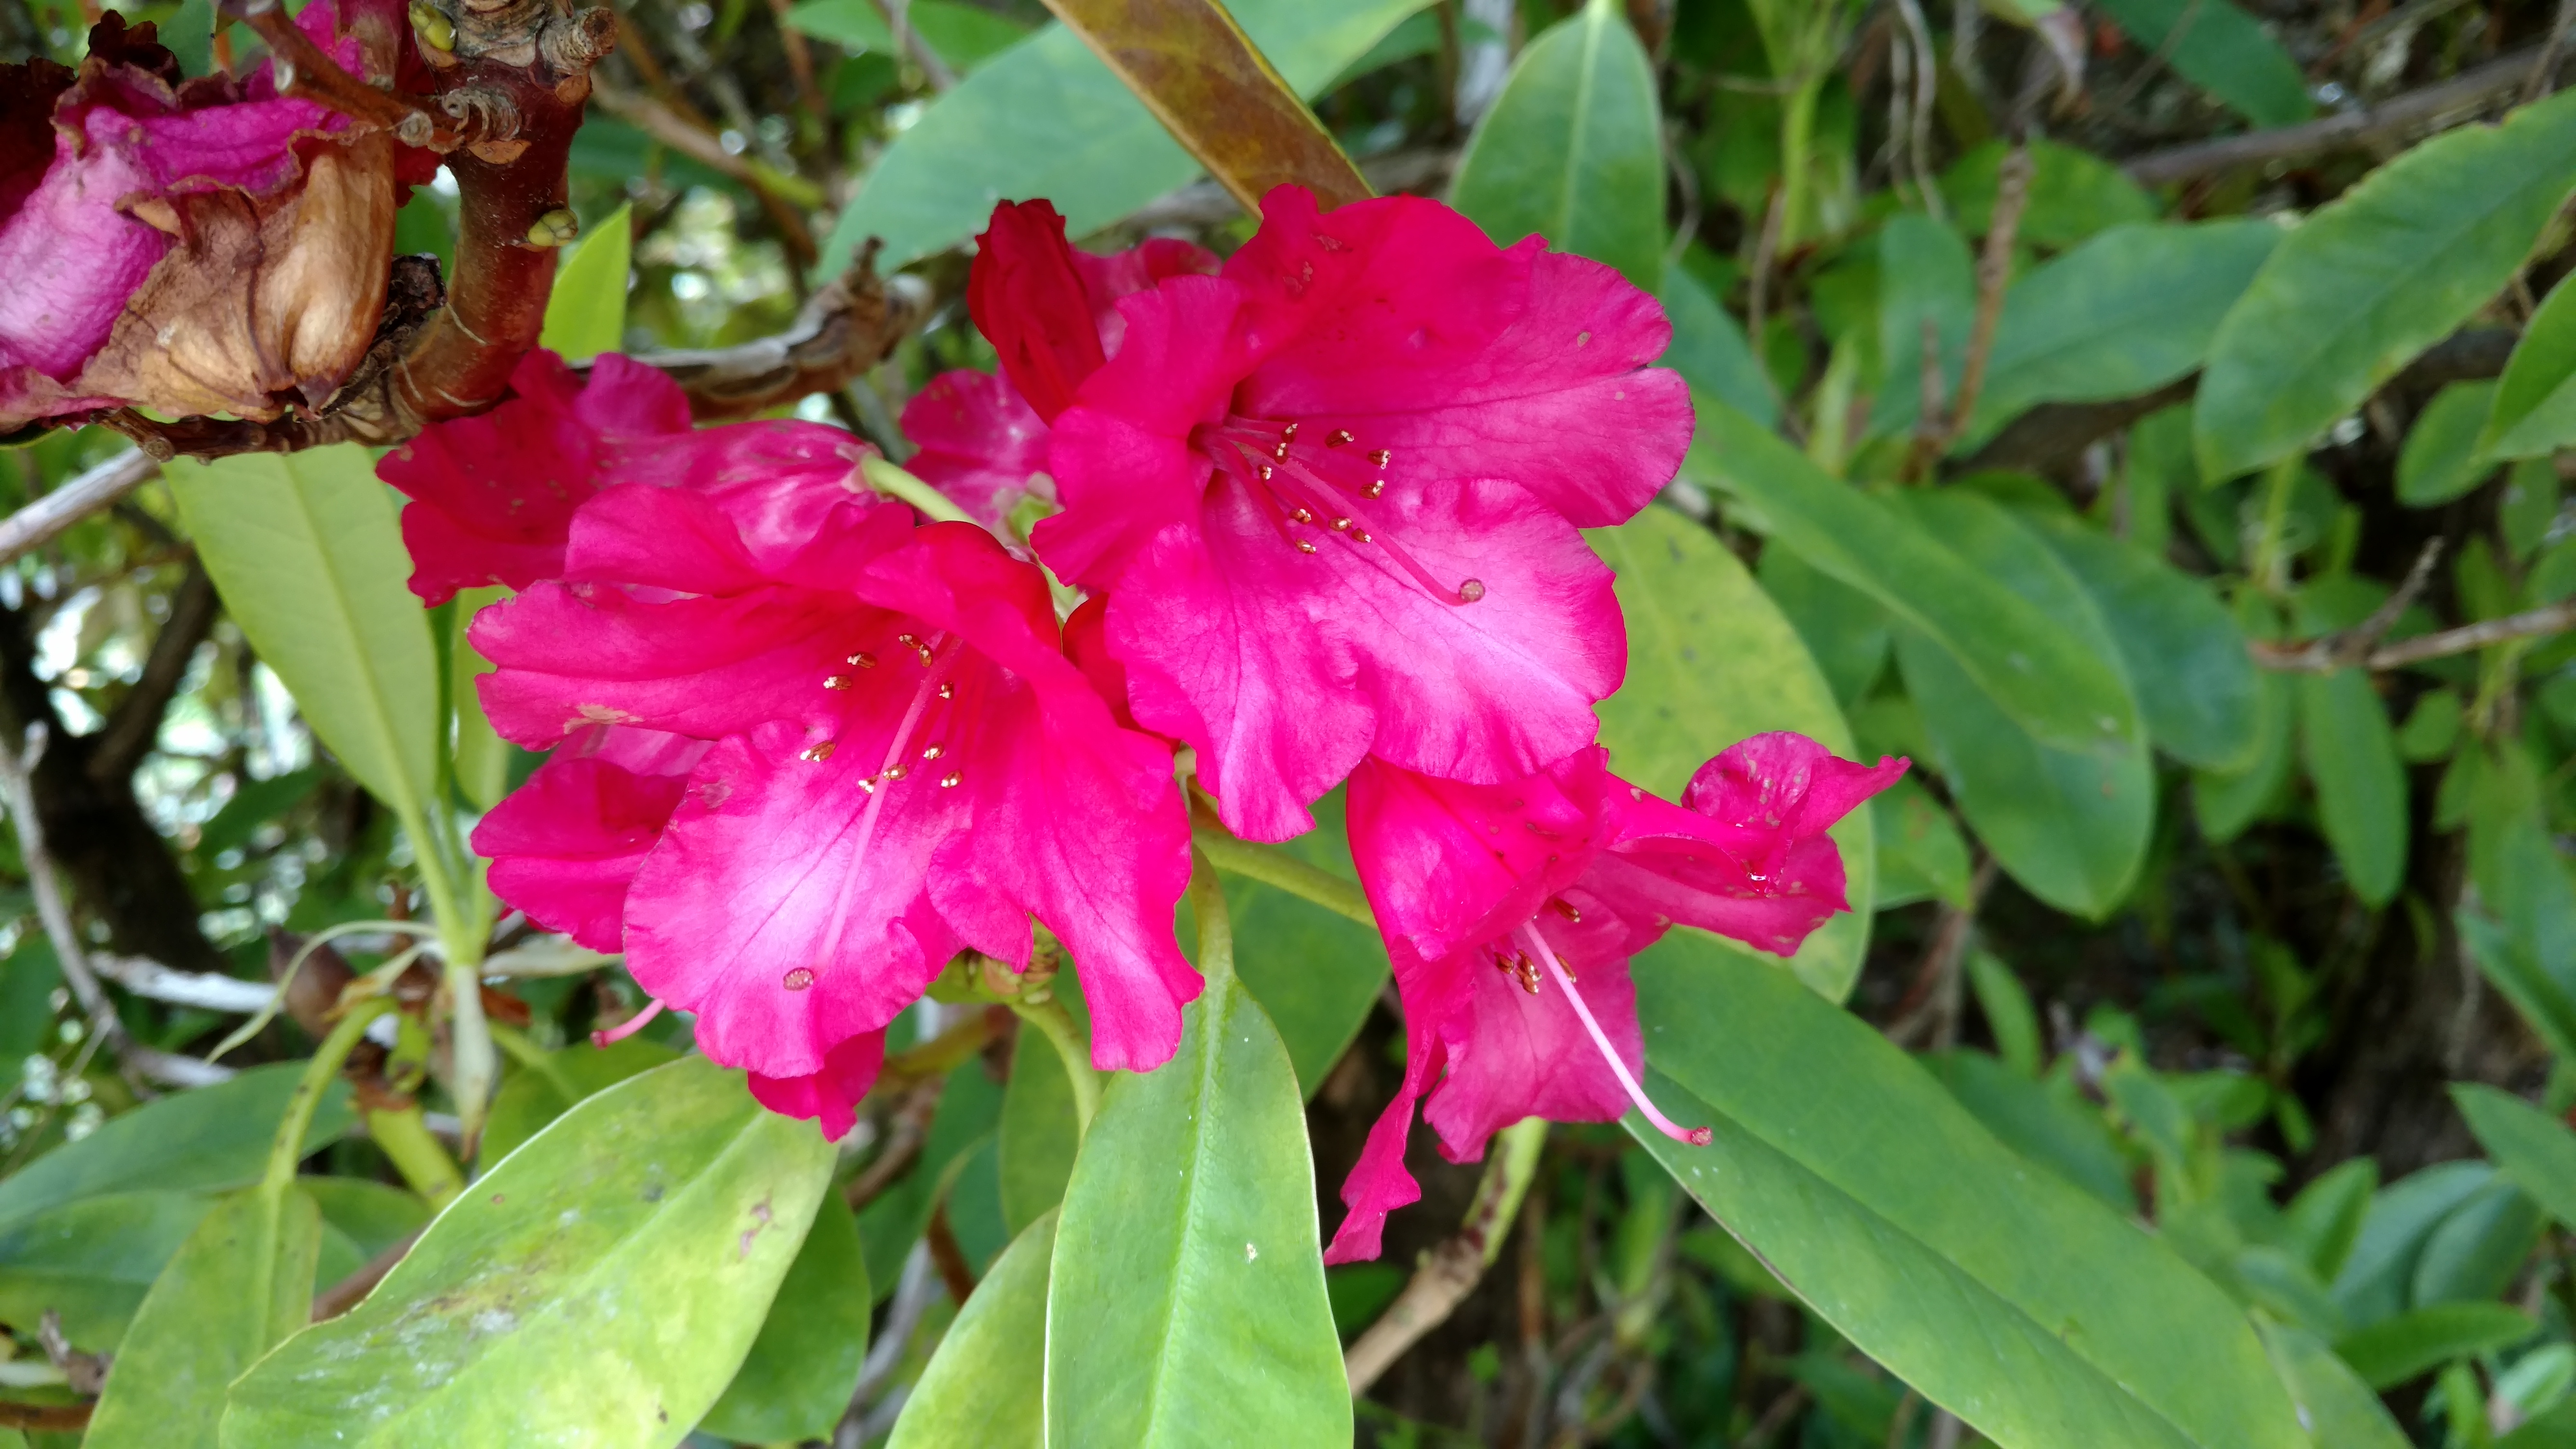 Rhododendron spp plantplacesimage20161213_112831.jpg